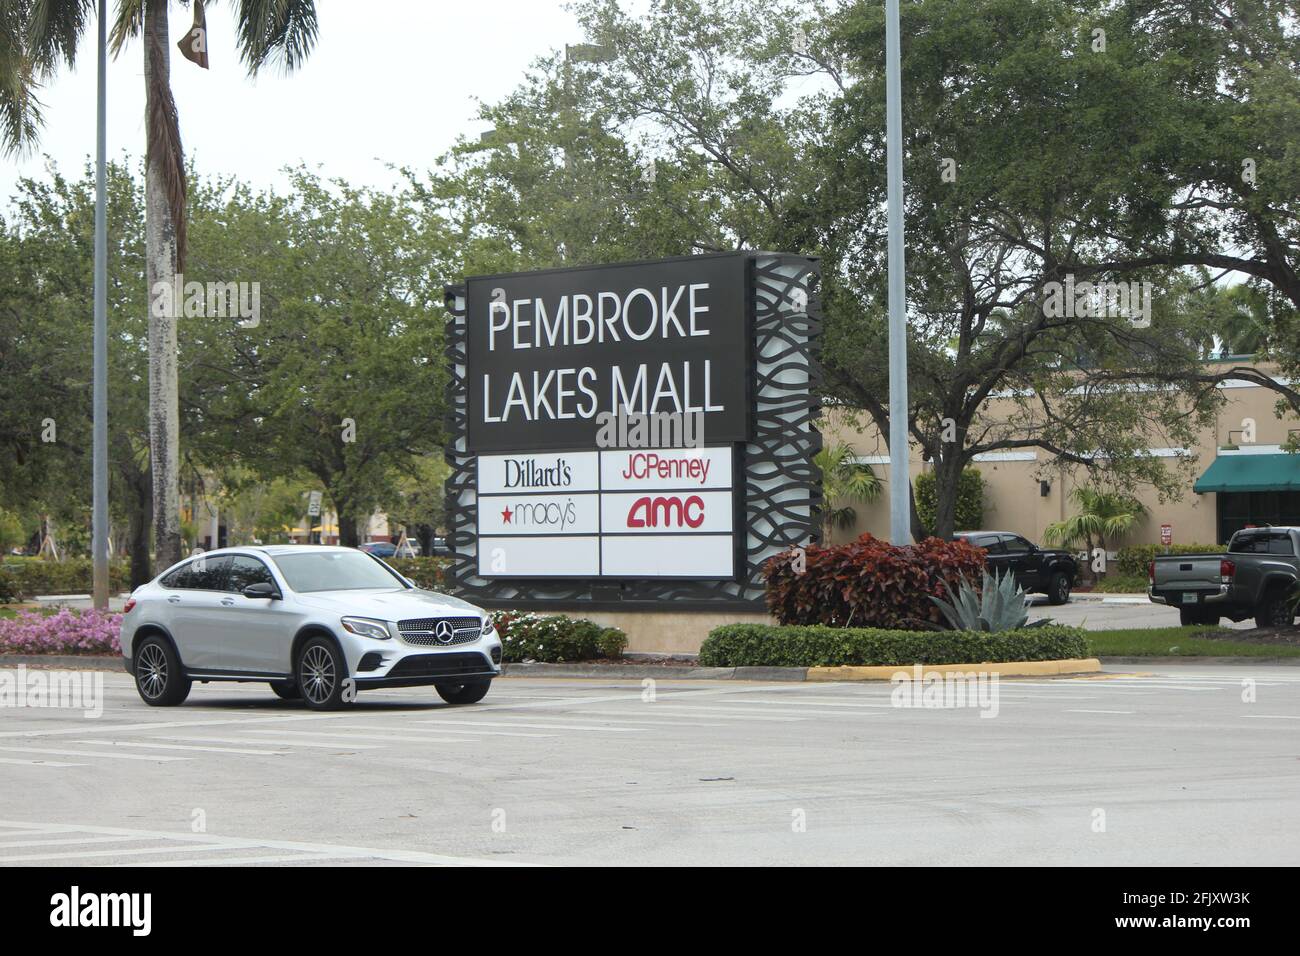 Pembroke Lakes Mall Schild in Pembroke Pines Florida und ein Mercedes Benz SUV Auto. Stockfoto